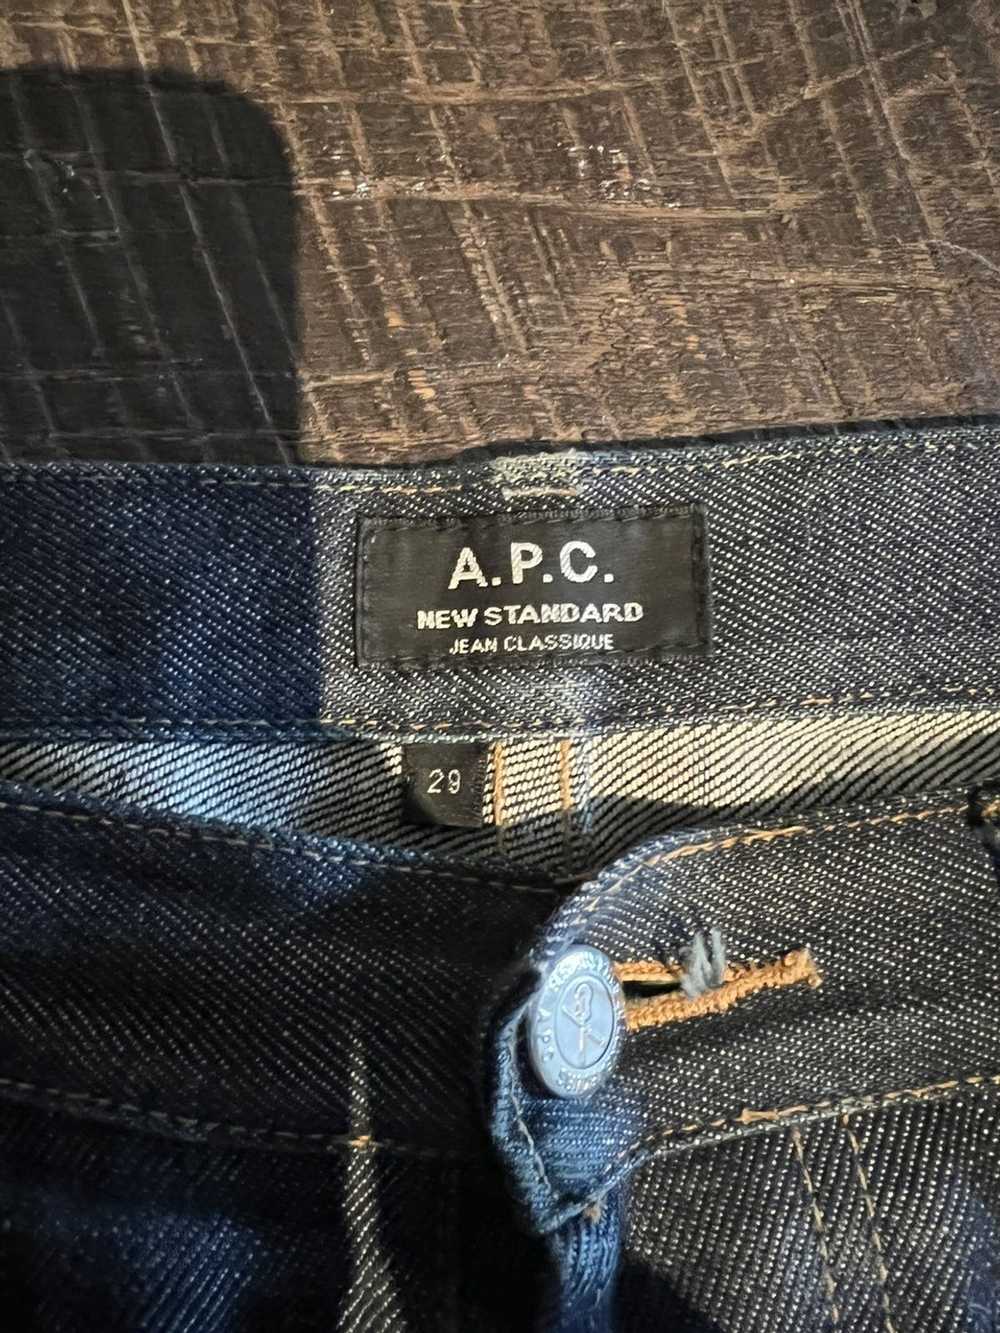 A.P.C. APC New Standard - image 2